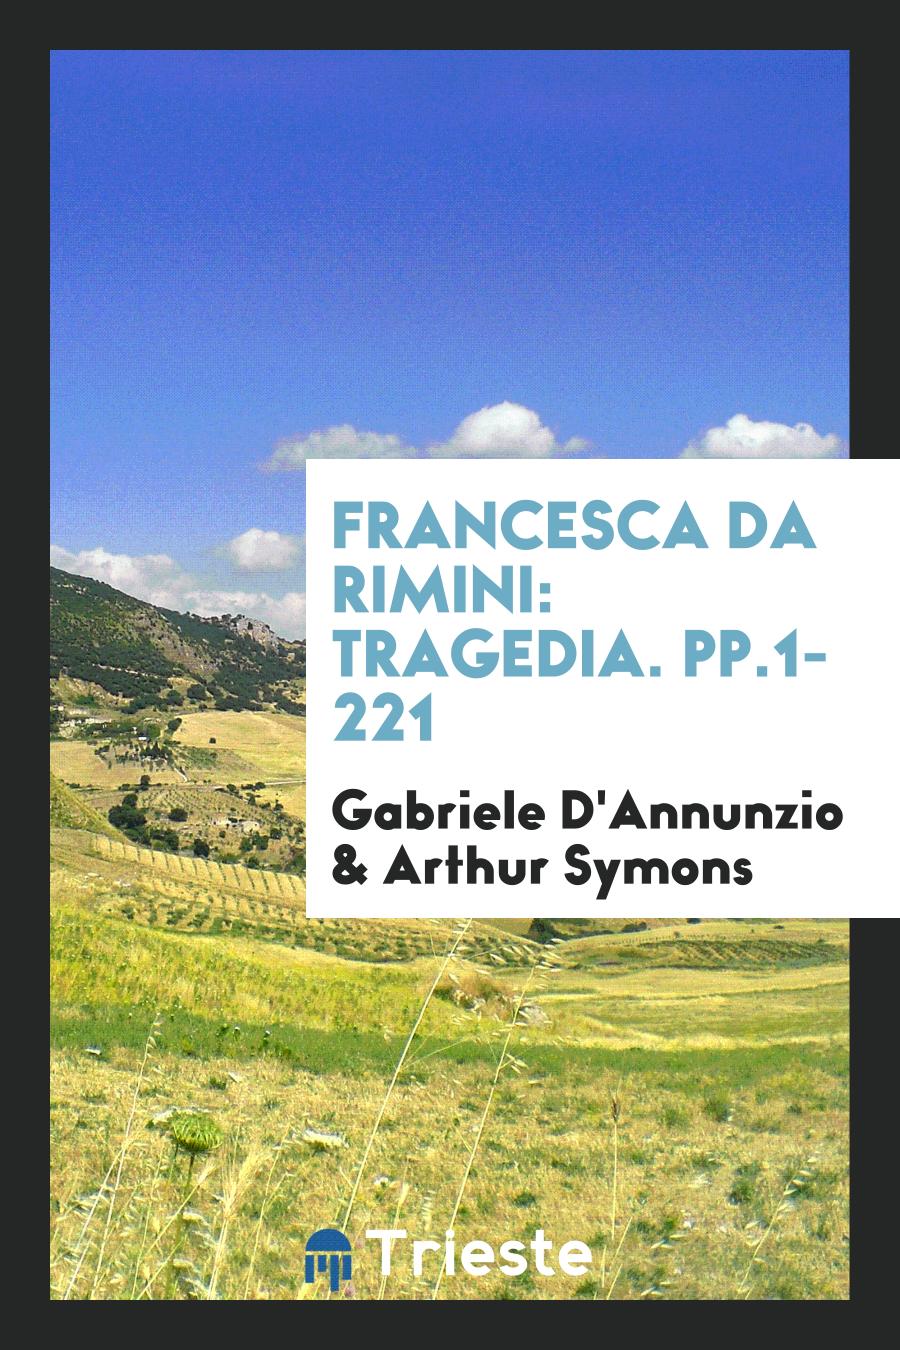 Francesca da Rimini: Tragedia. pp.1-221